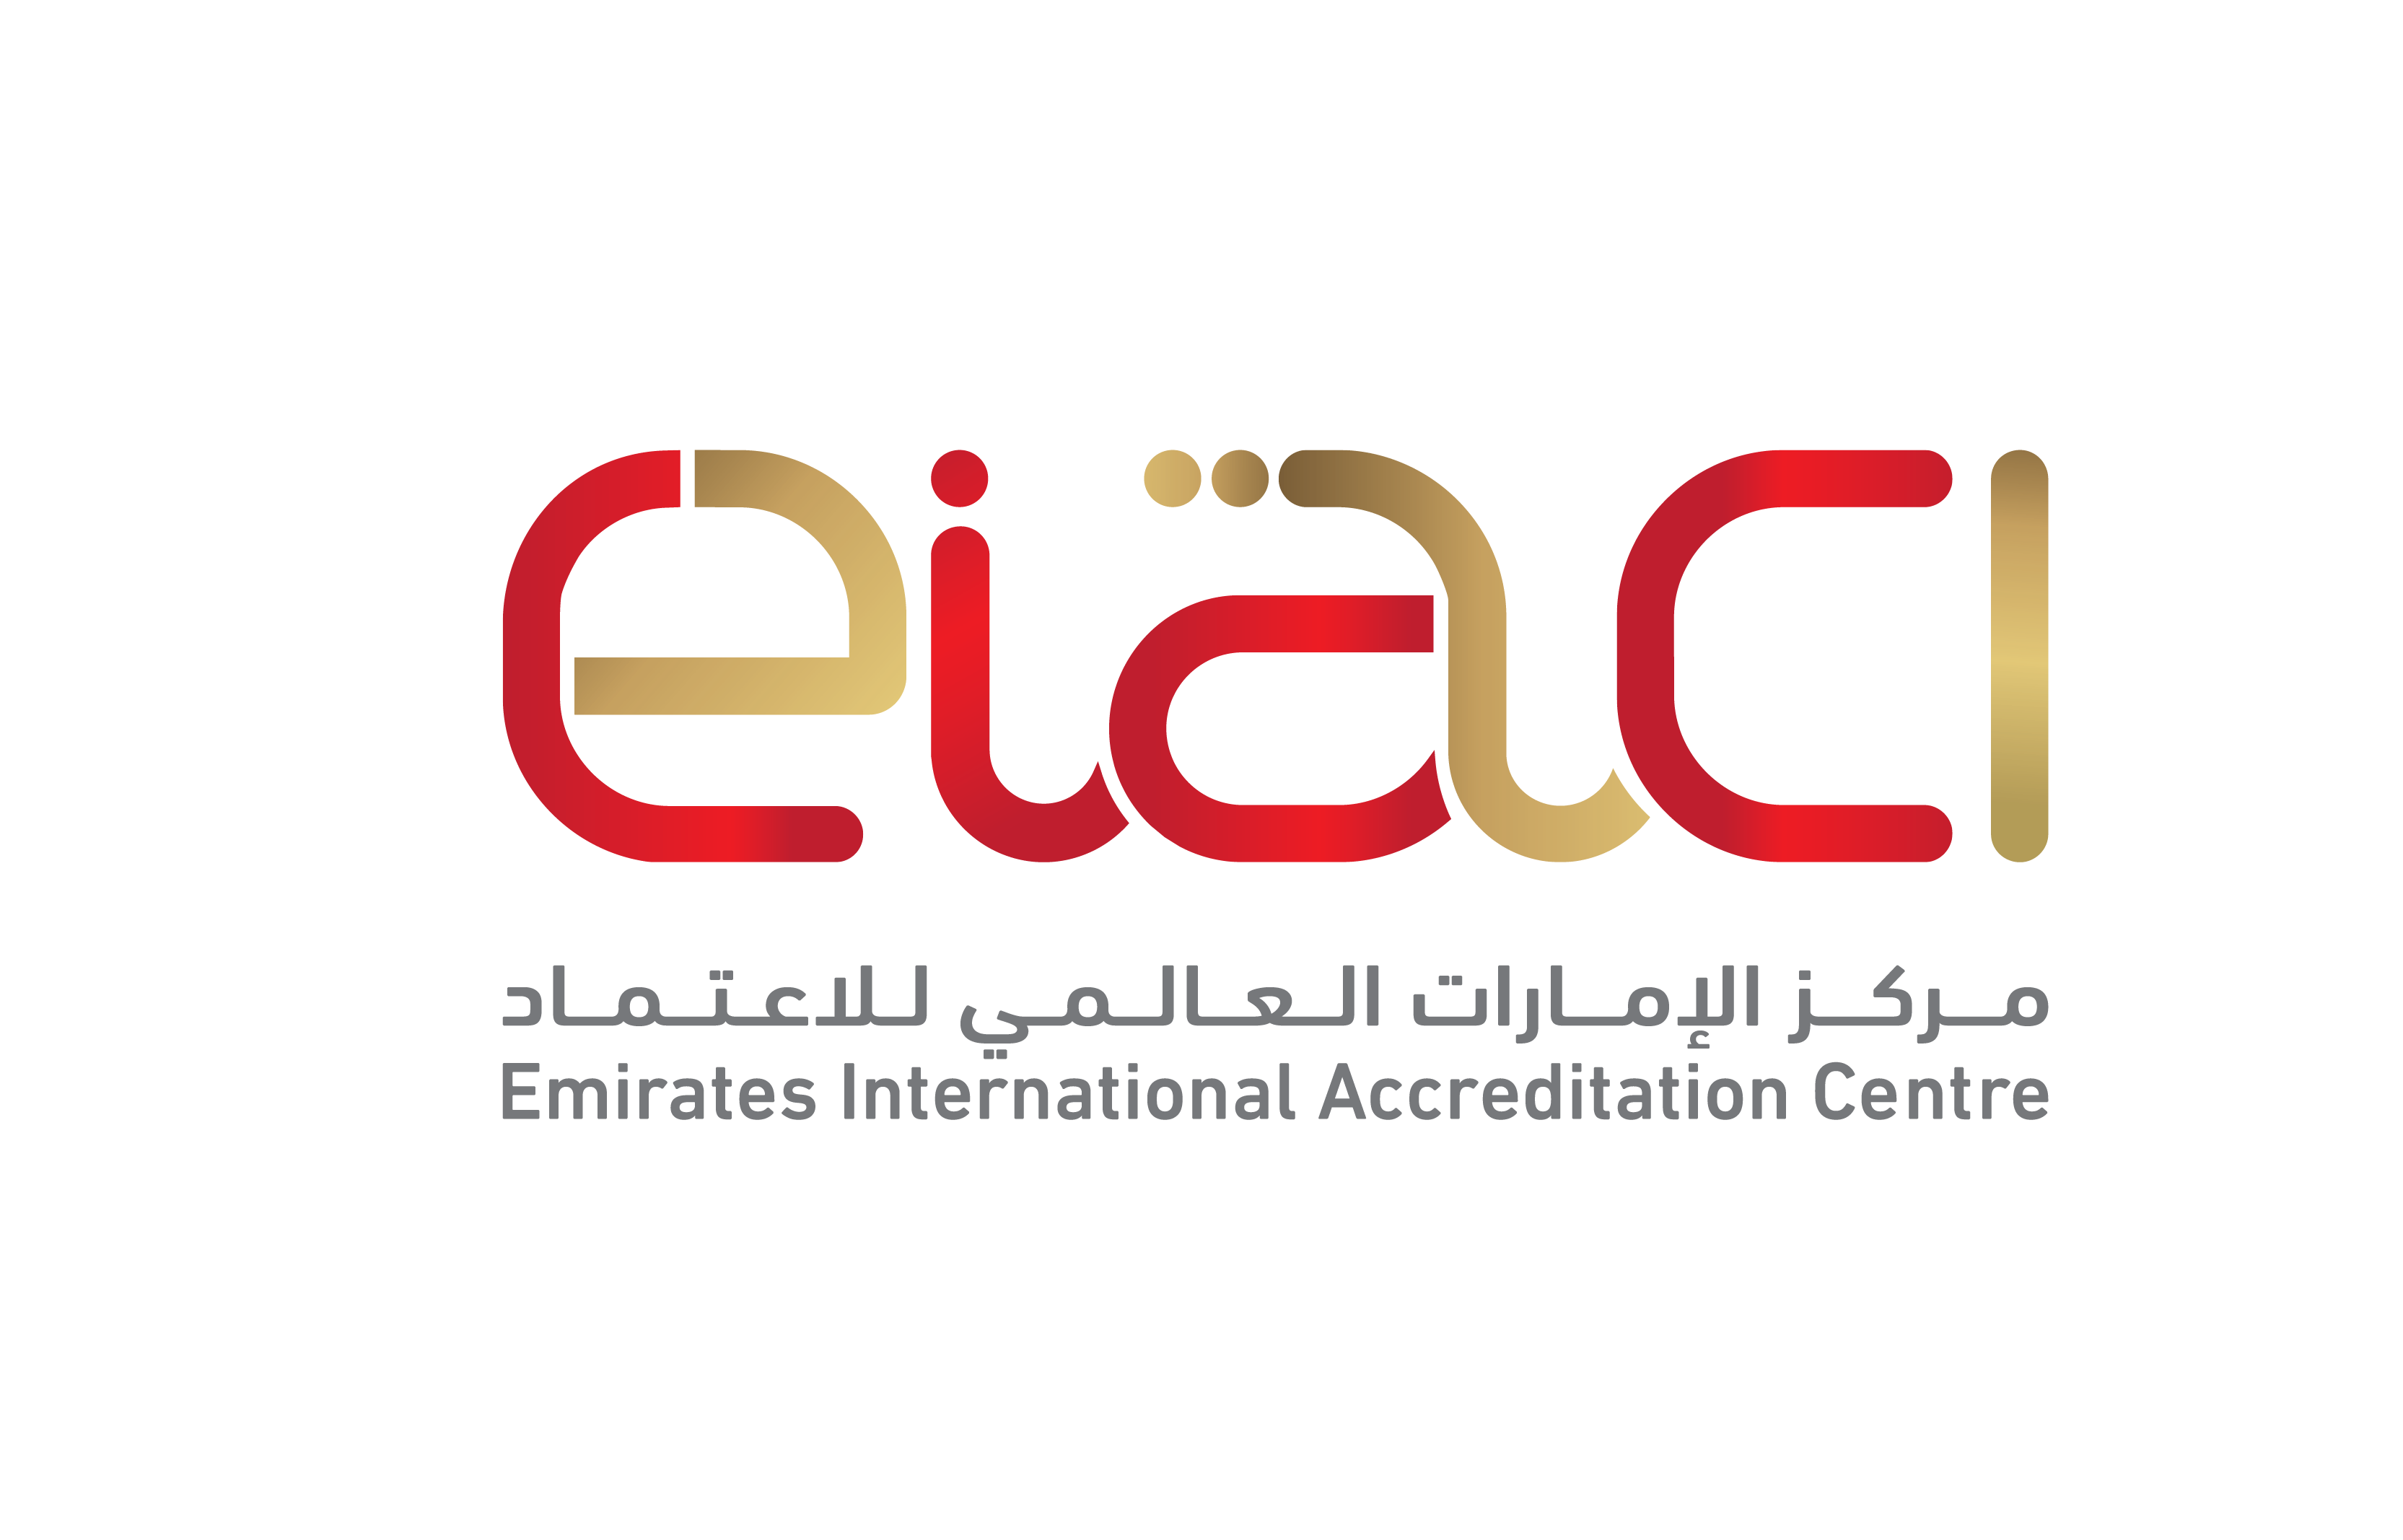 Emirates International Accreditation Centre (EIAC)